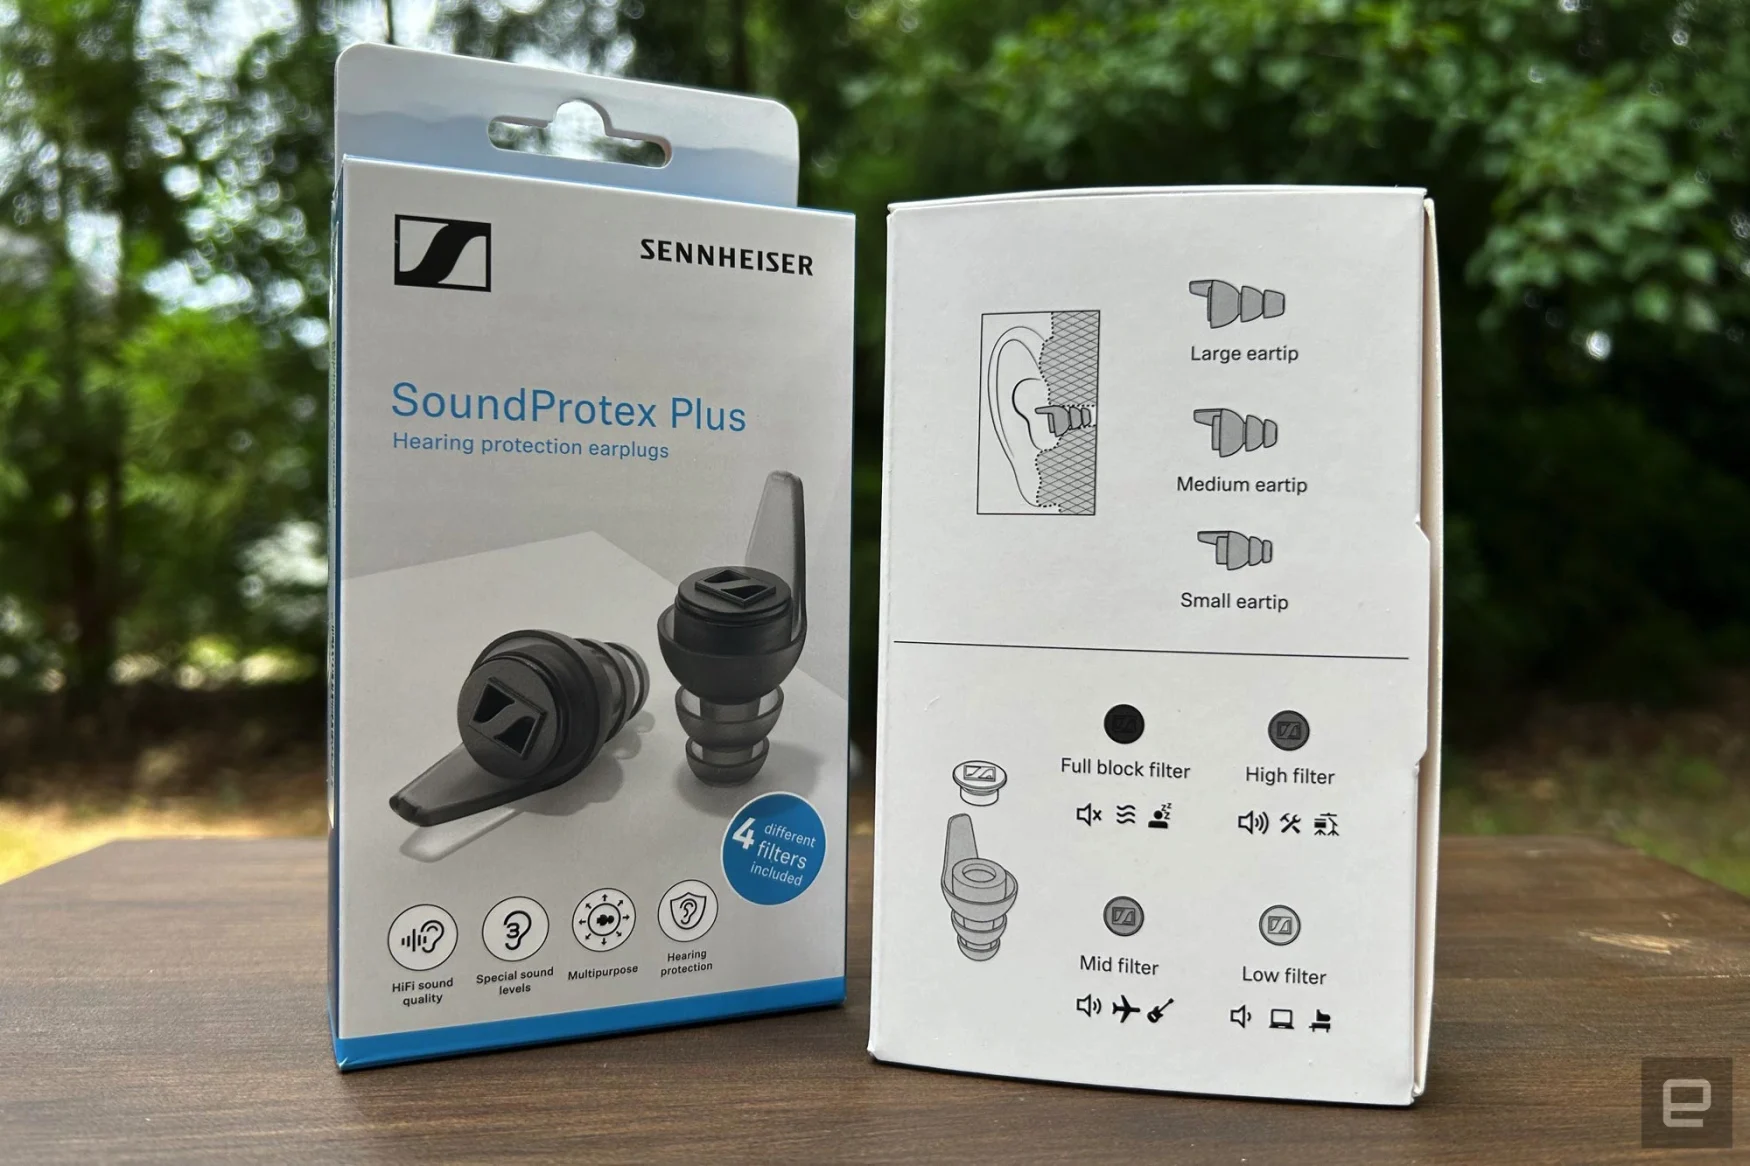 Sennheiser SoundProtex Plus